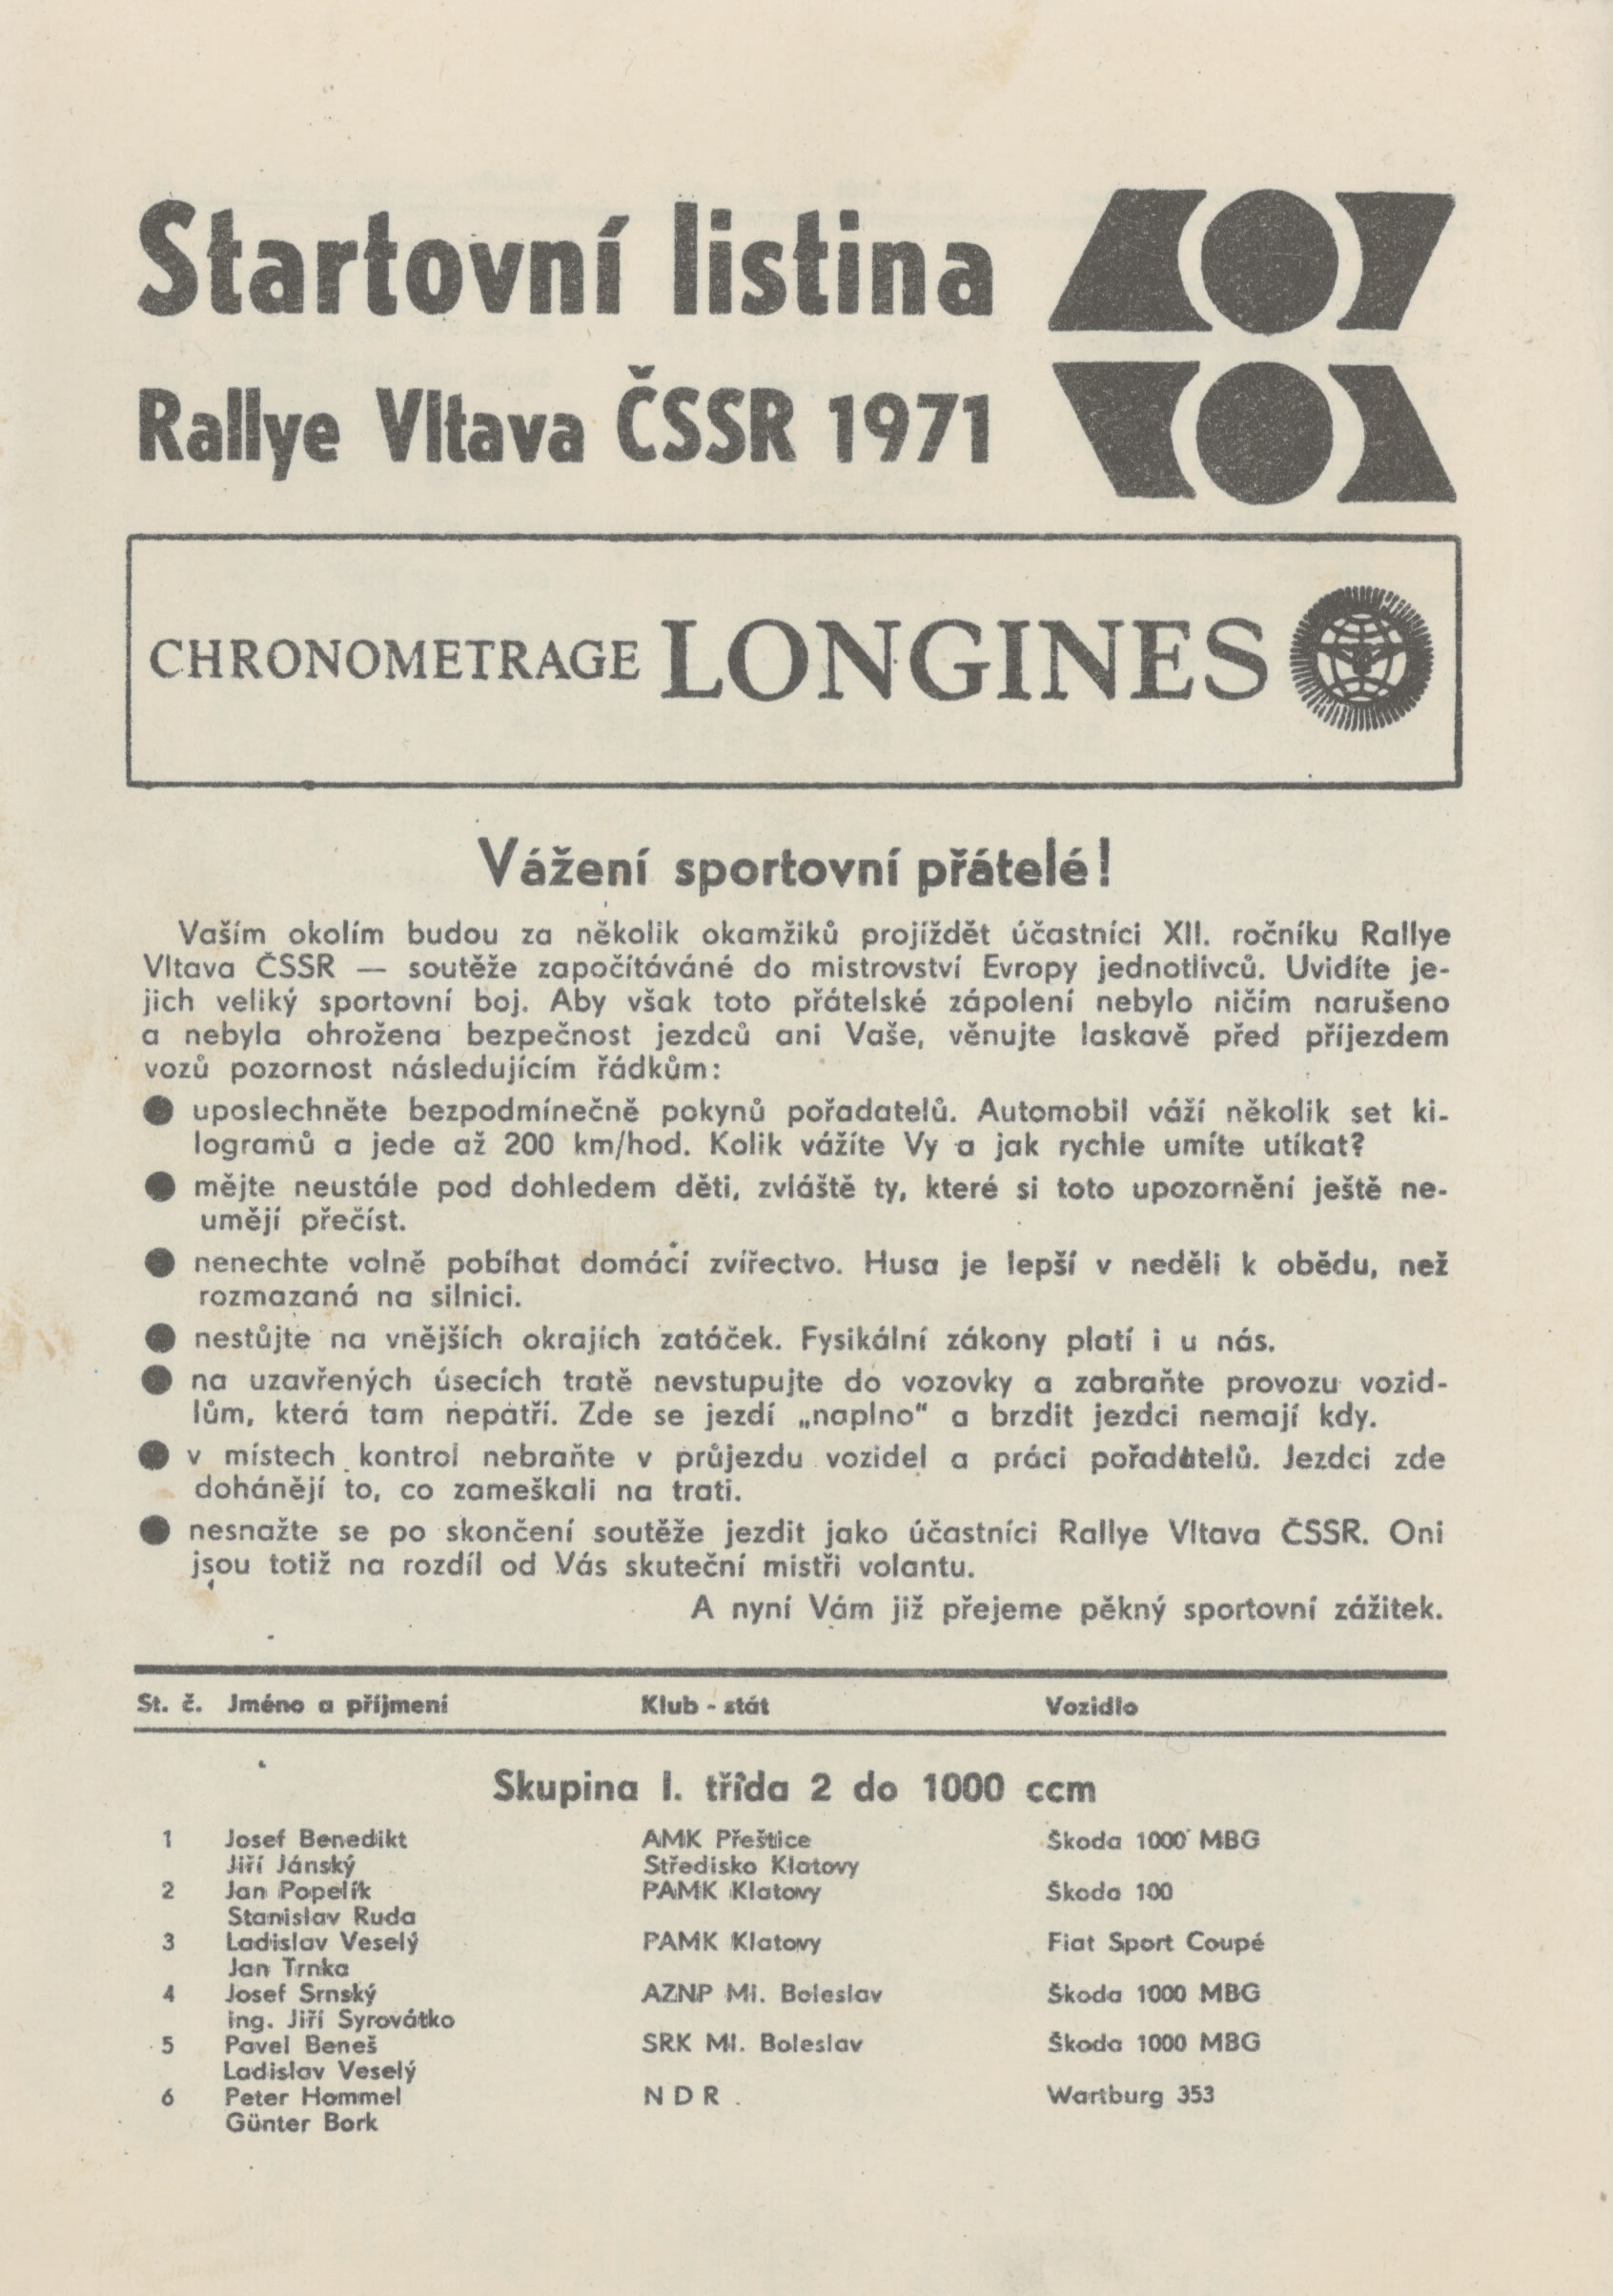 Rallye Vltava 1971